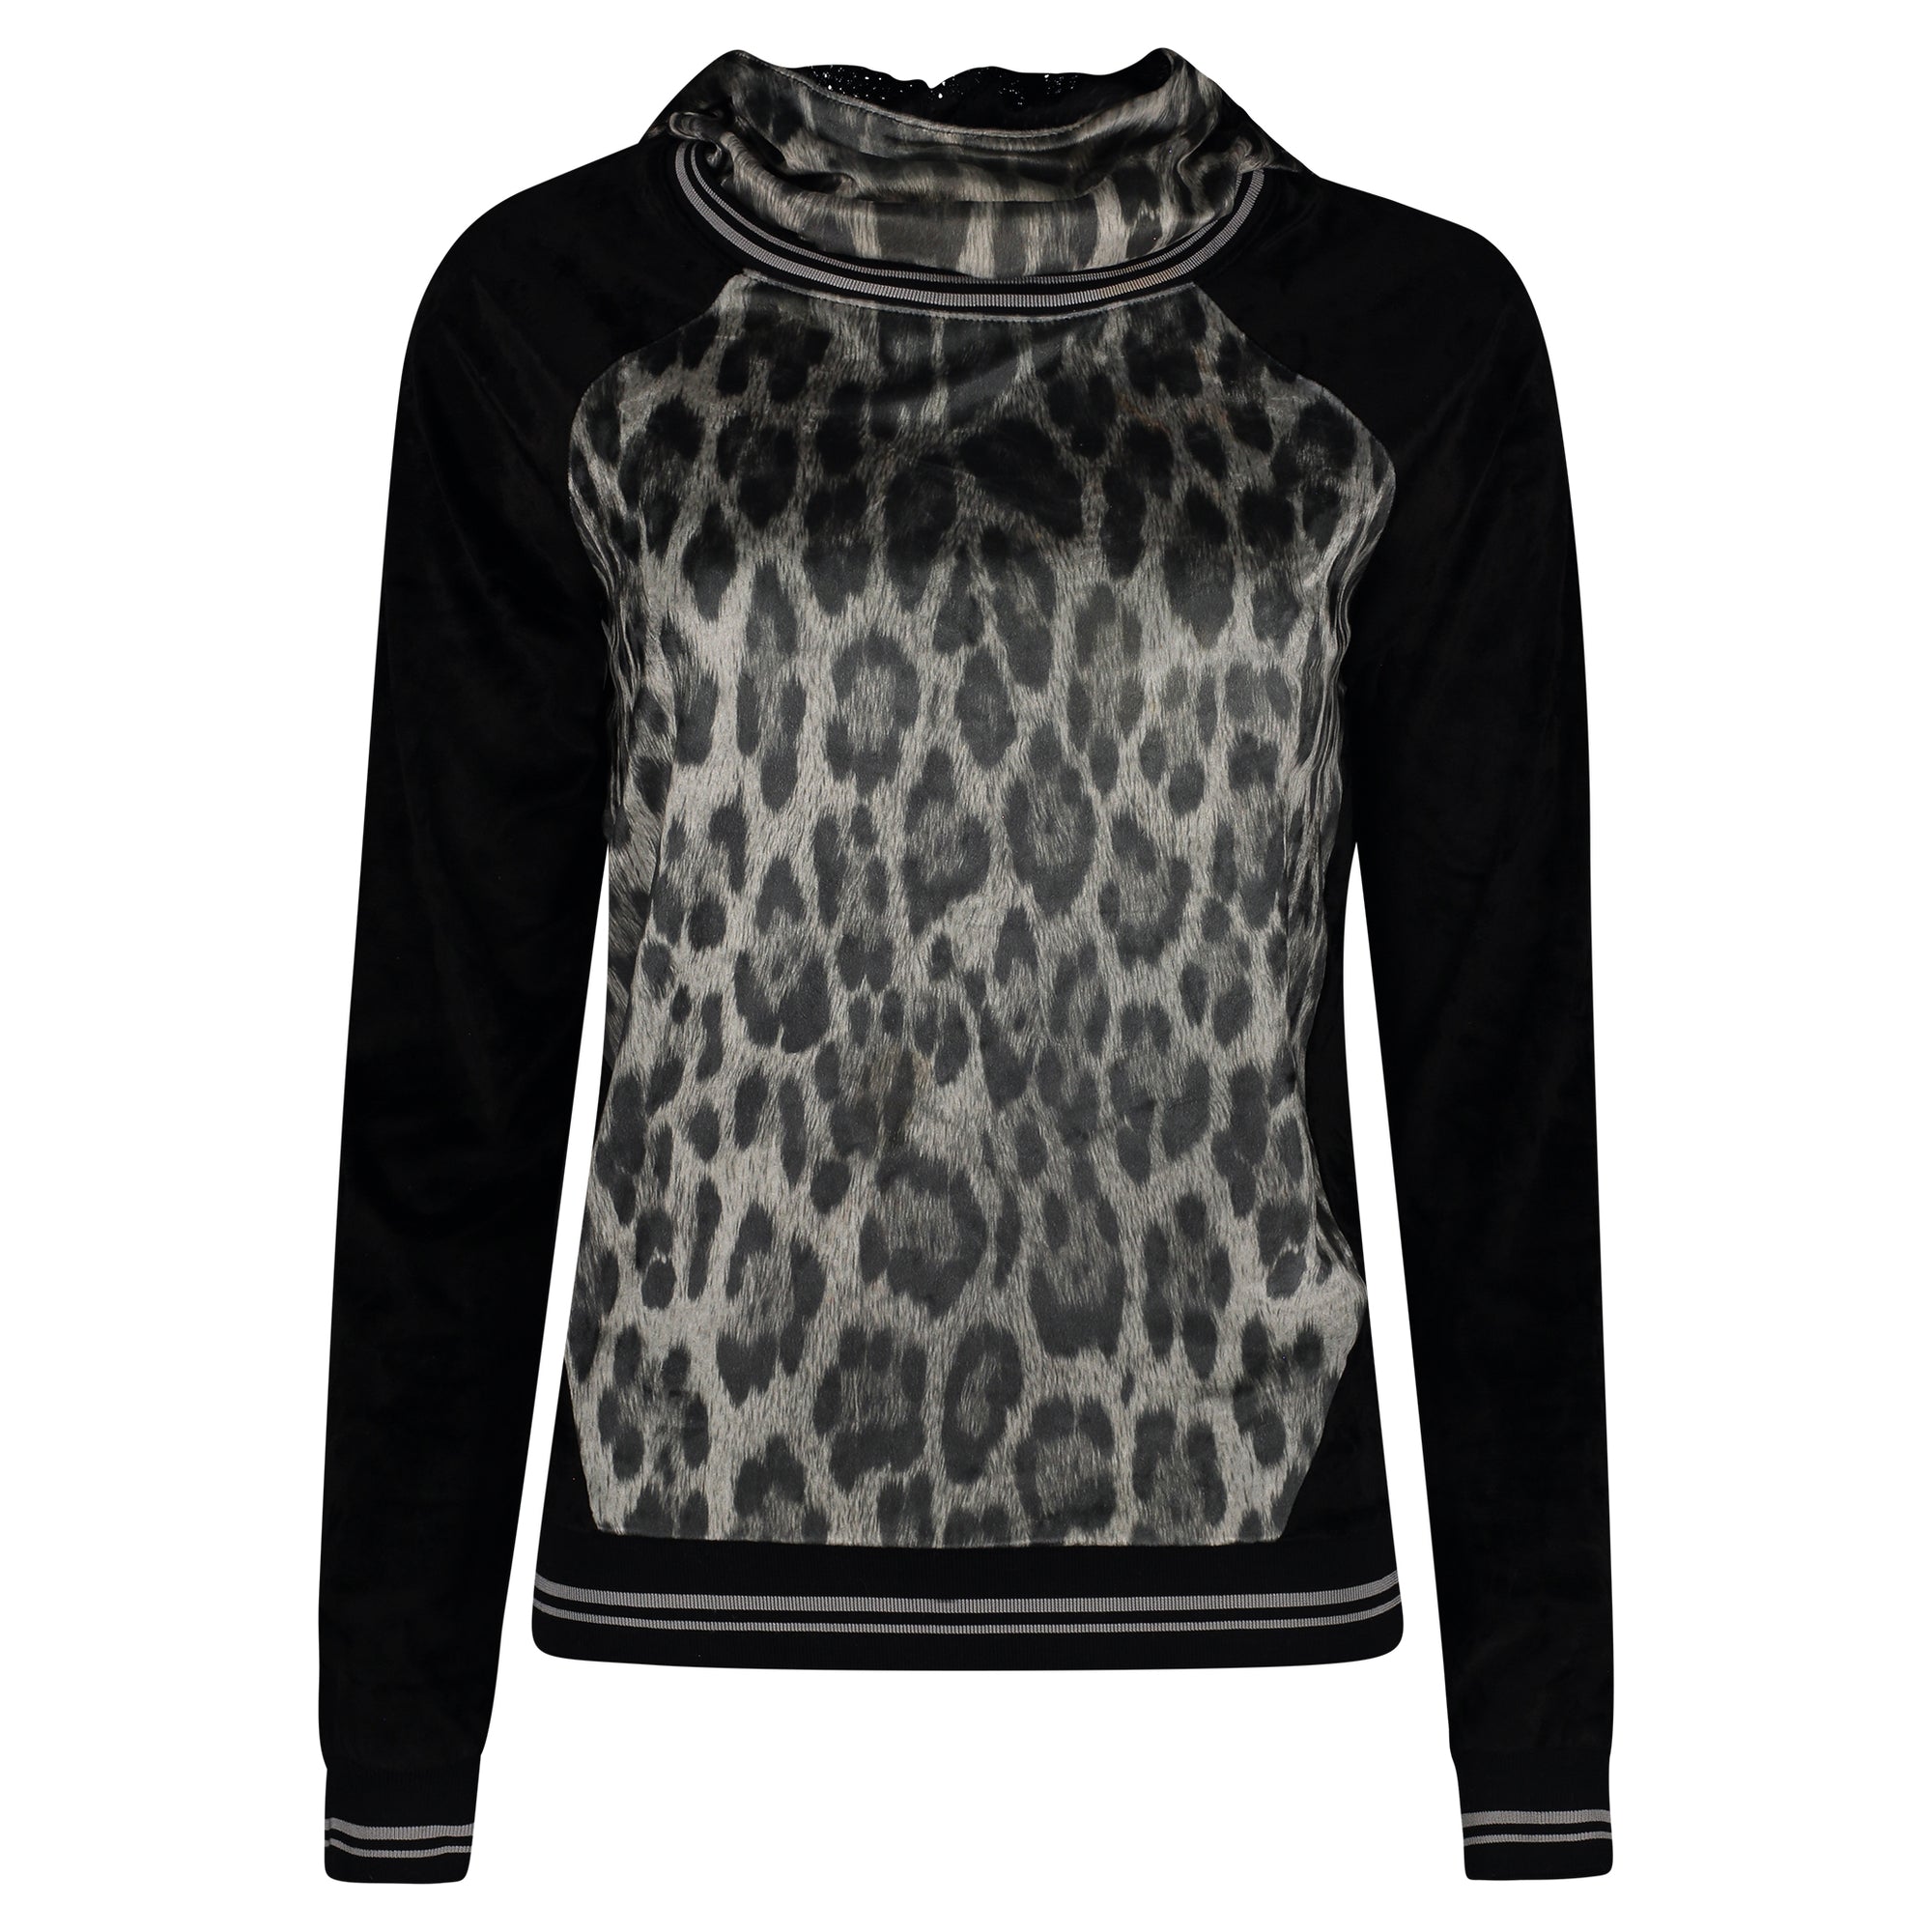 Just Cavalli Cheetah Print Sweatshirt